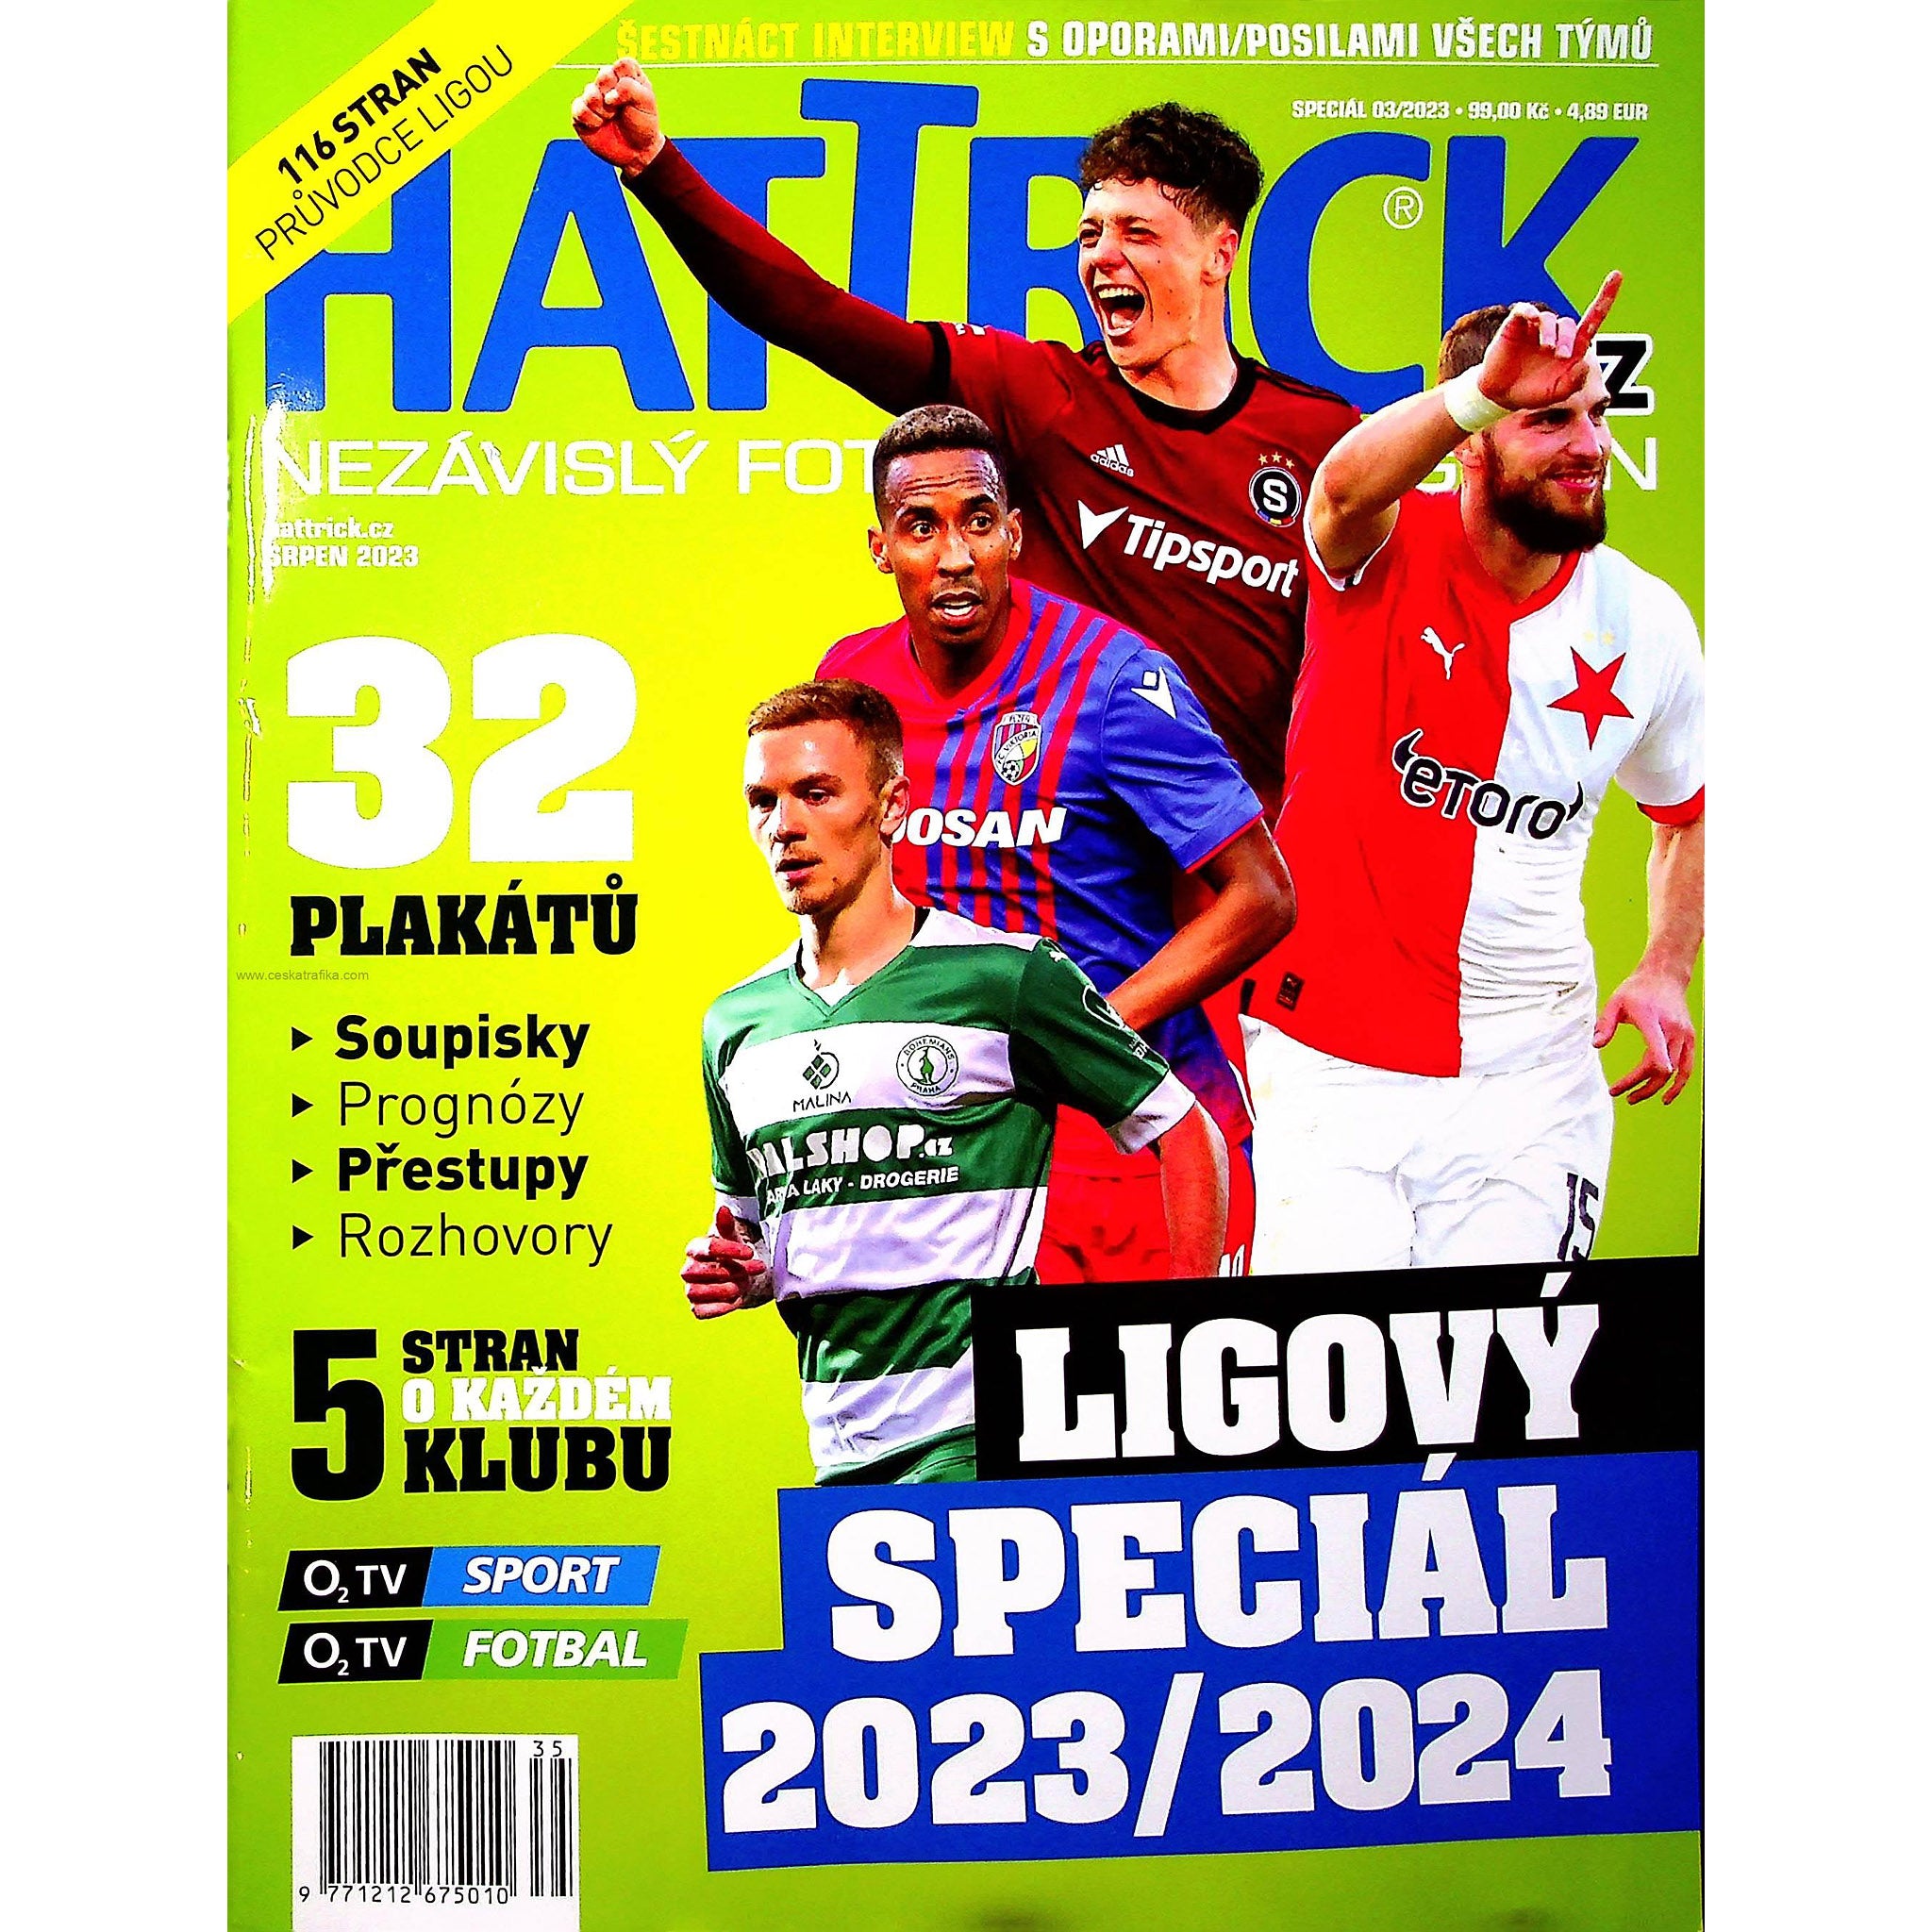 Hat Trick Ligovy Special 2023/2024 (Czech Republic Season Preview)